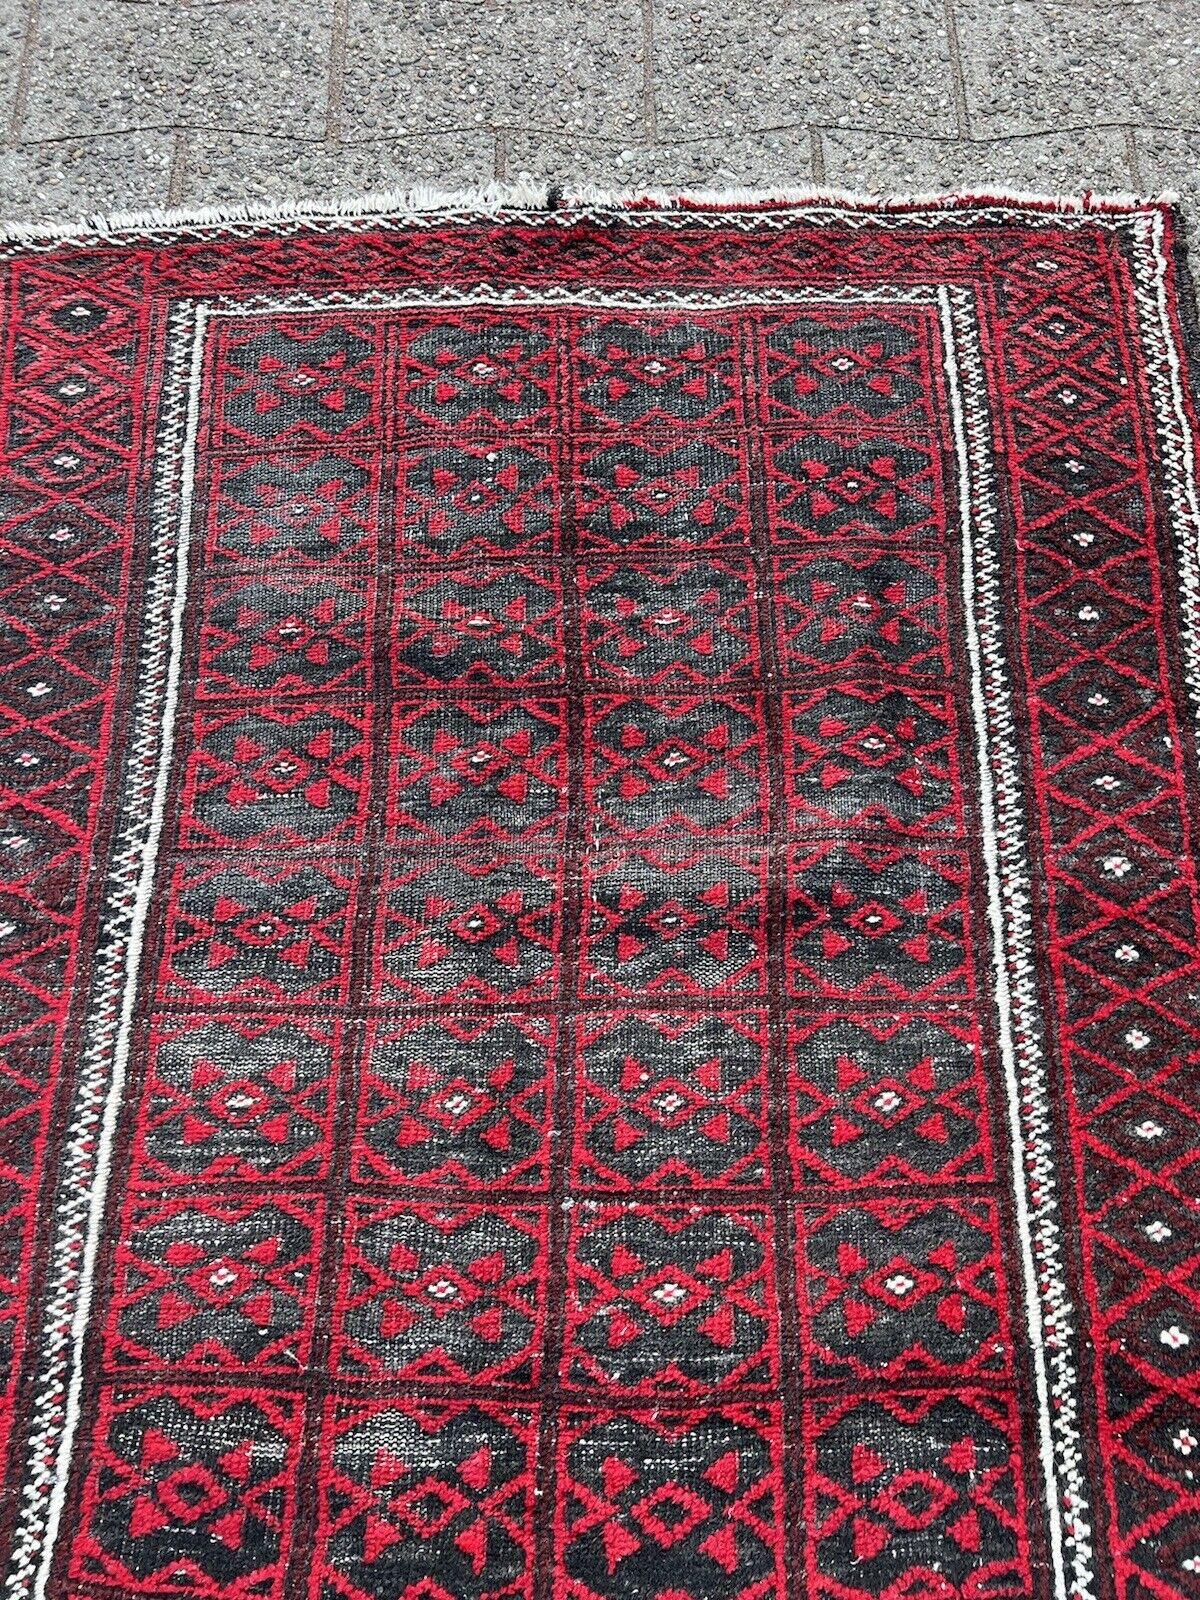 Handmade Vintage Afghan Baluch Rug 2.9' x 5.3', 1960s - 1S32 For Sale 5